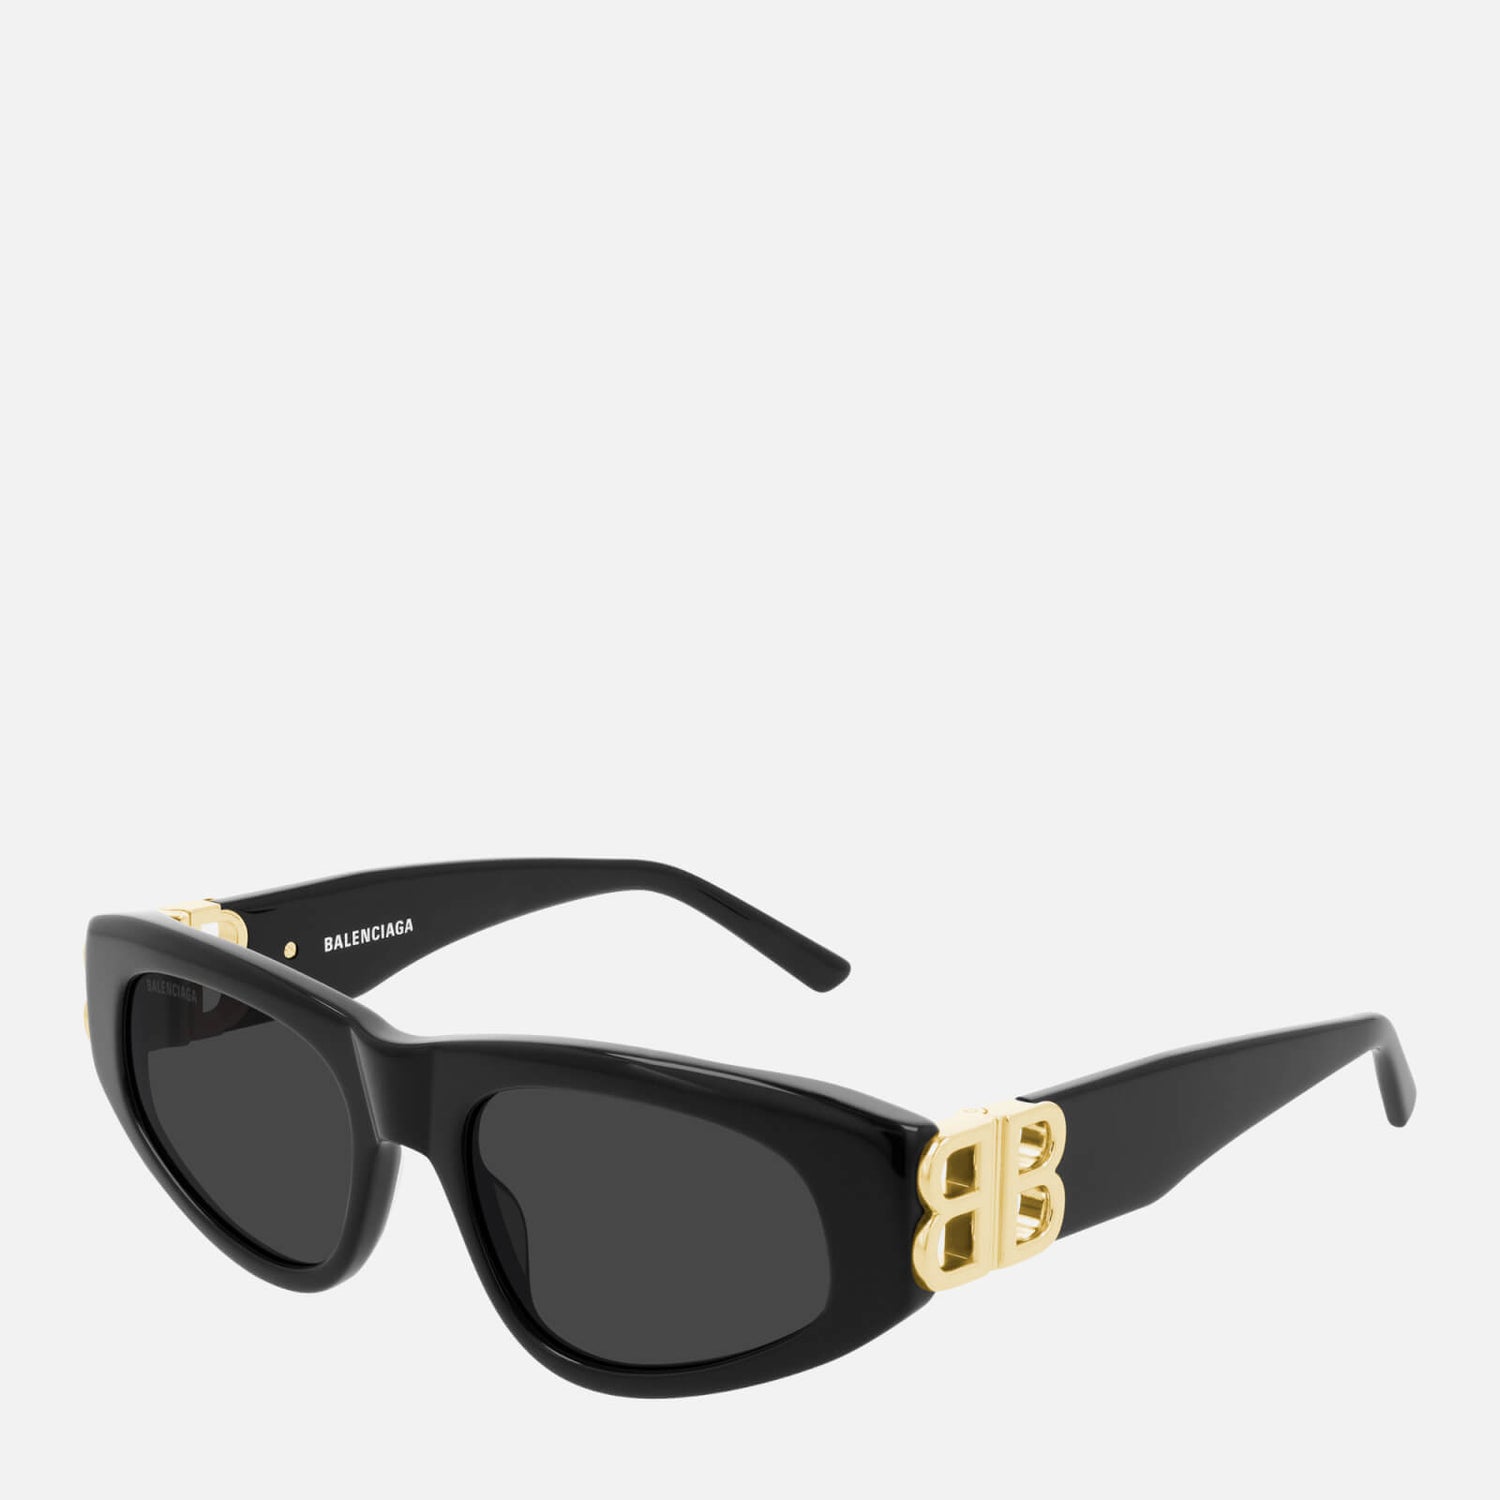 Balenciaga Women's Oval Acetate Sunglasses - Black/Gold